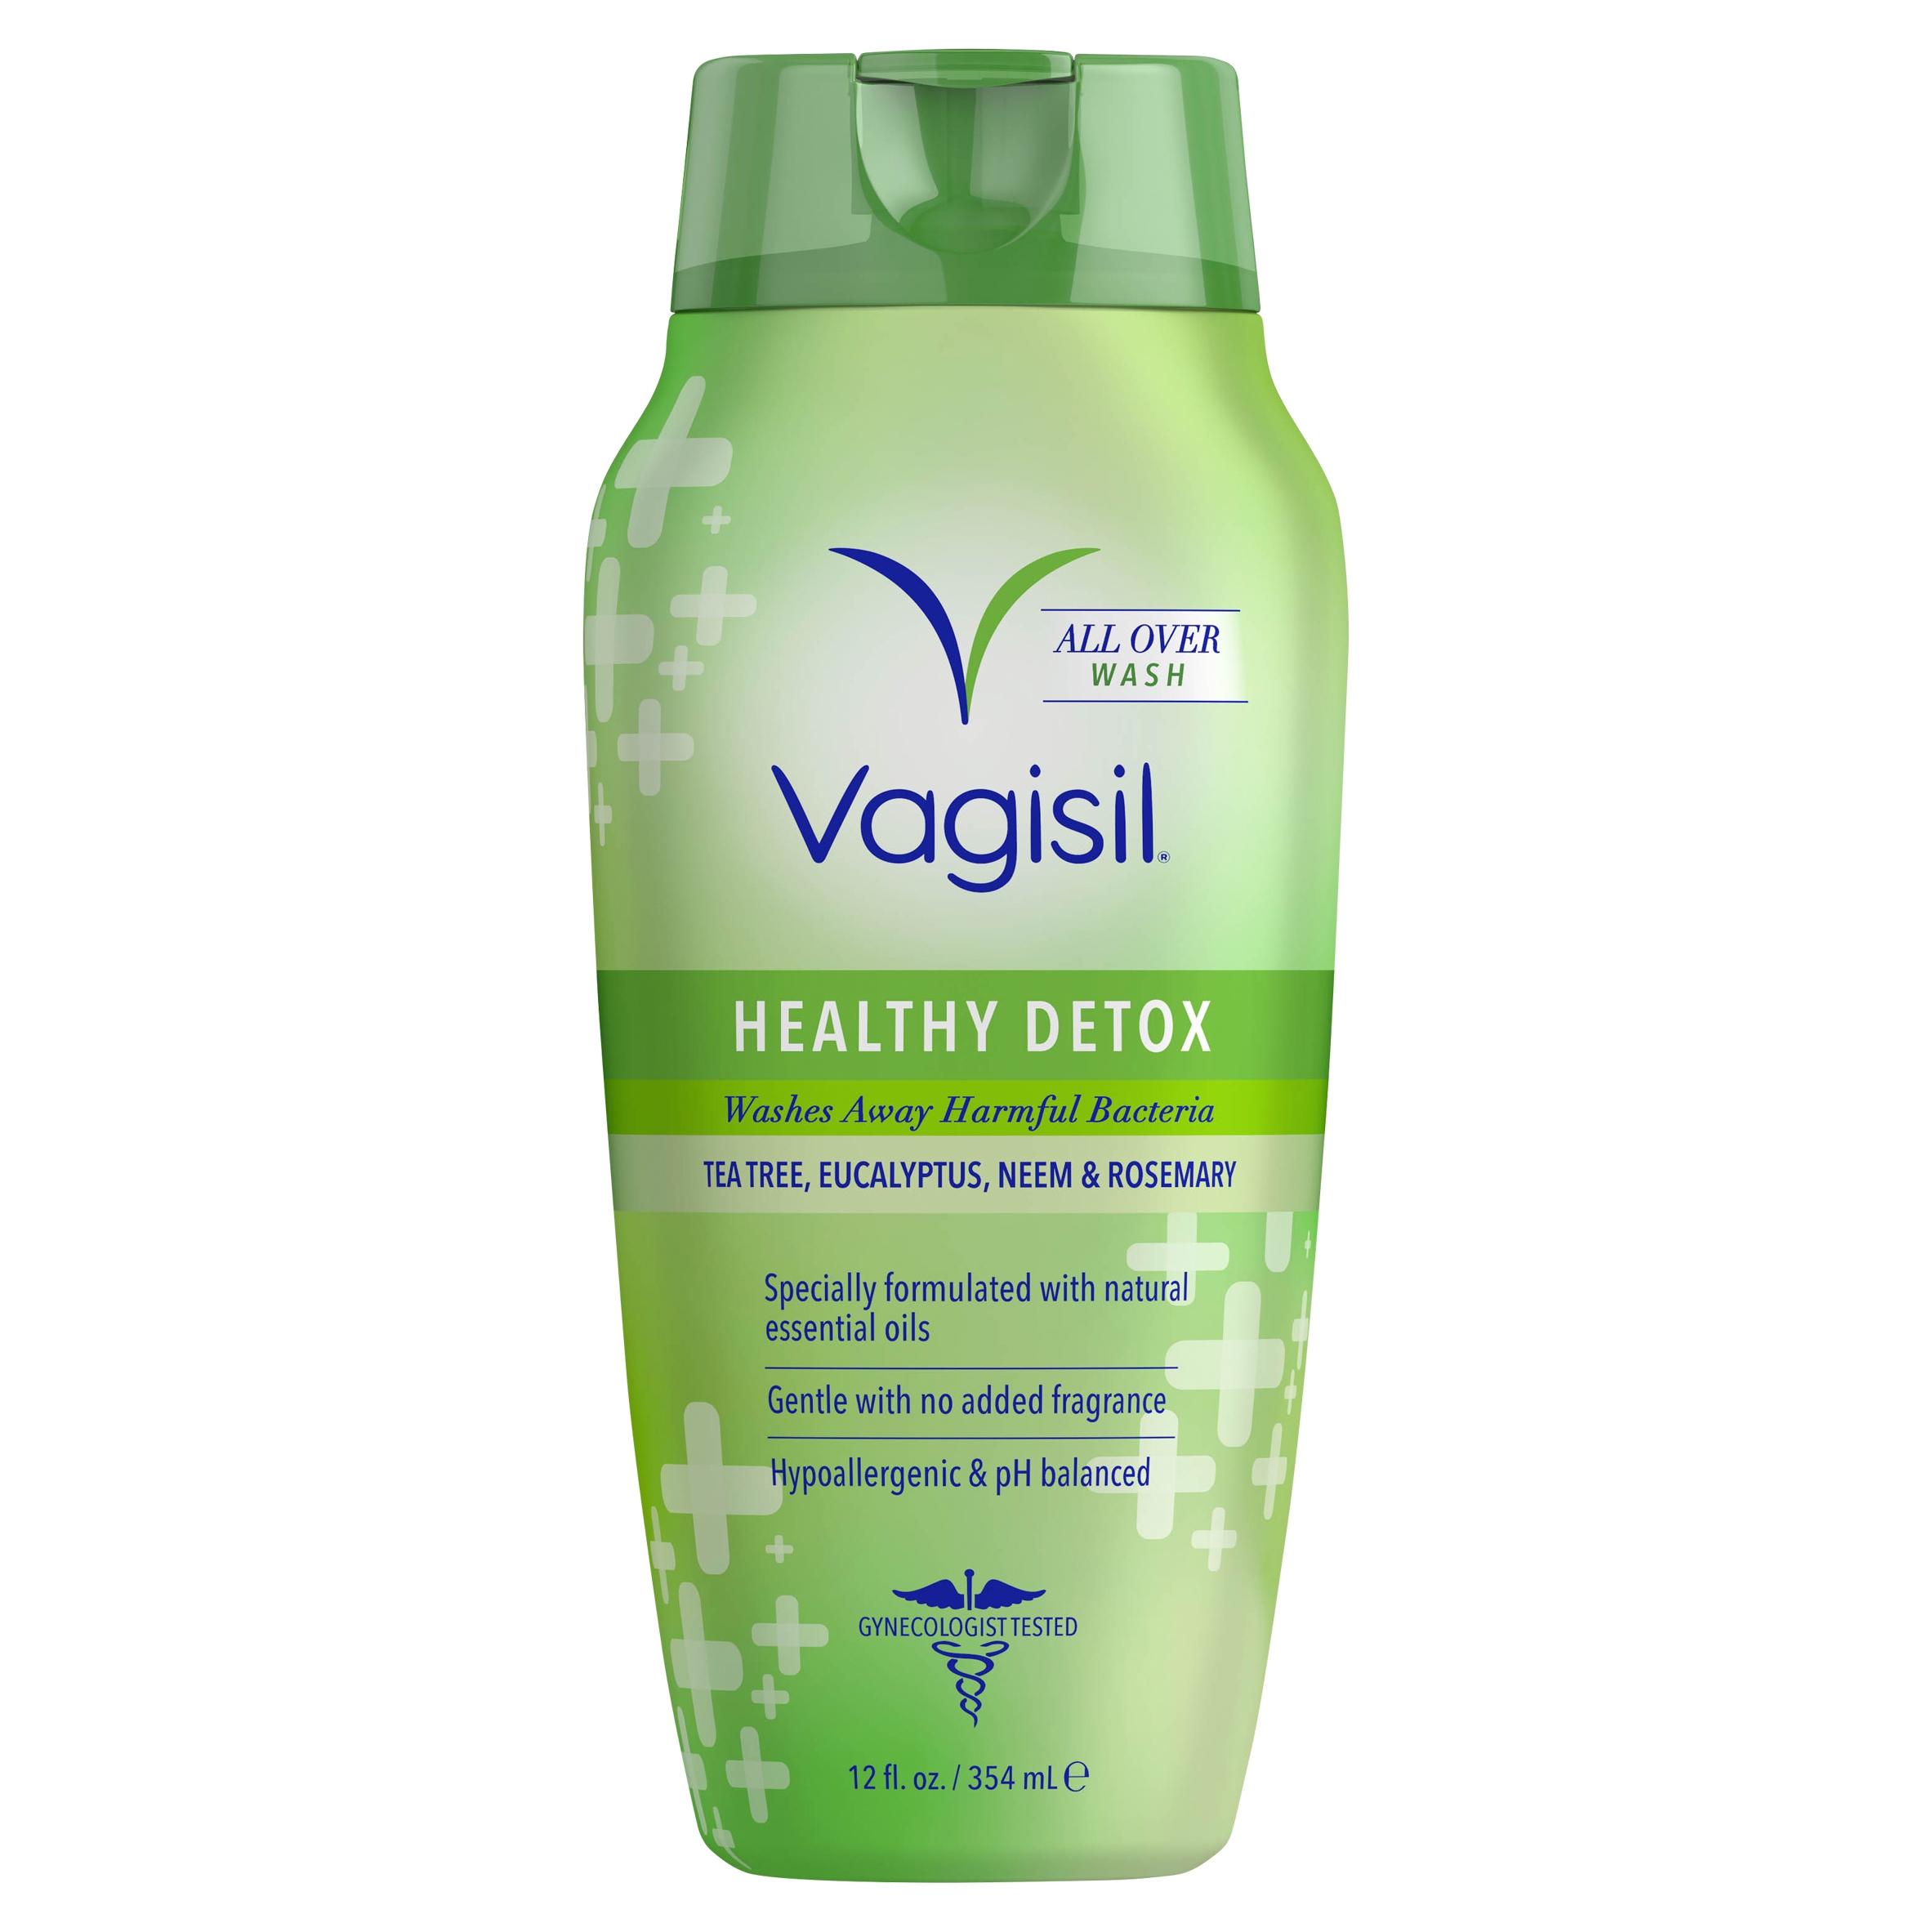 Vagisil Healthy Detox Daily Intimate Vaginal Feminine Wash, 12 oz, 1 Pack - image 1 of 7